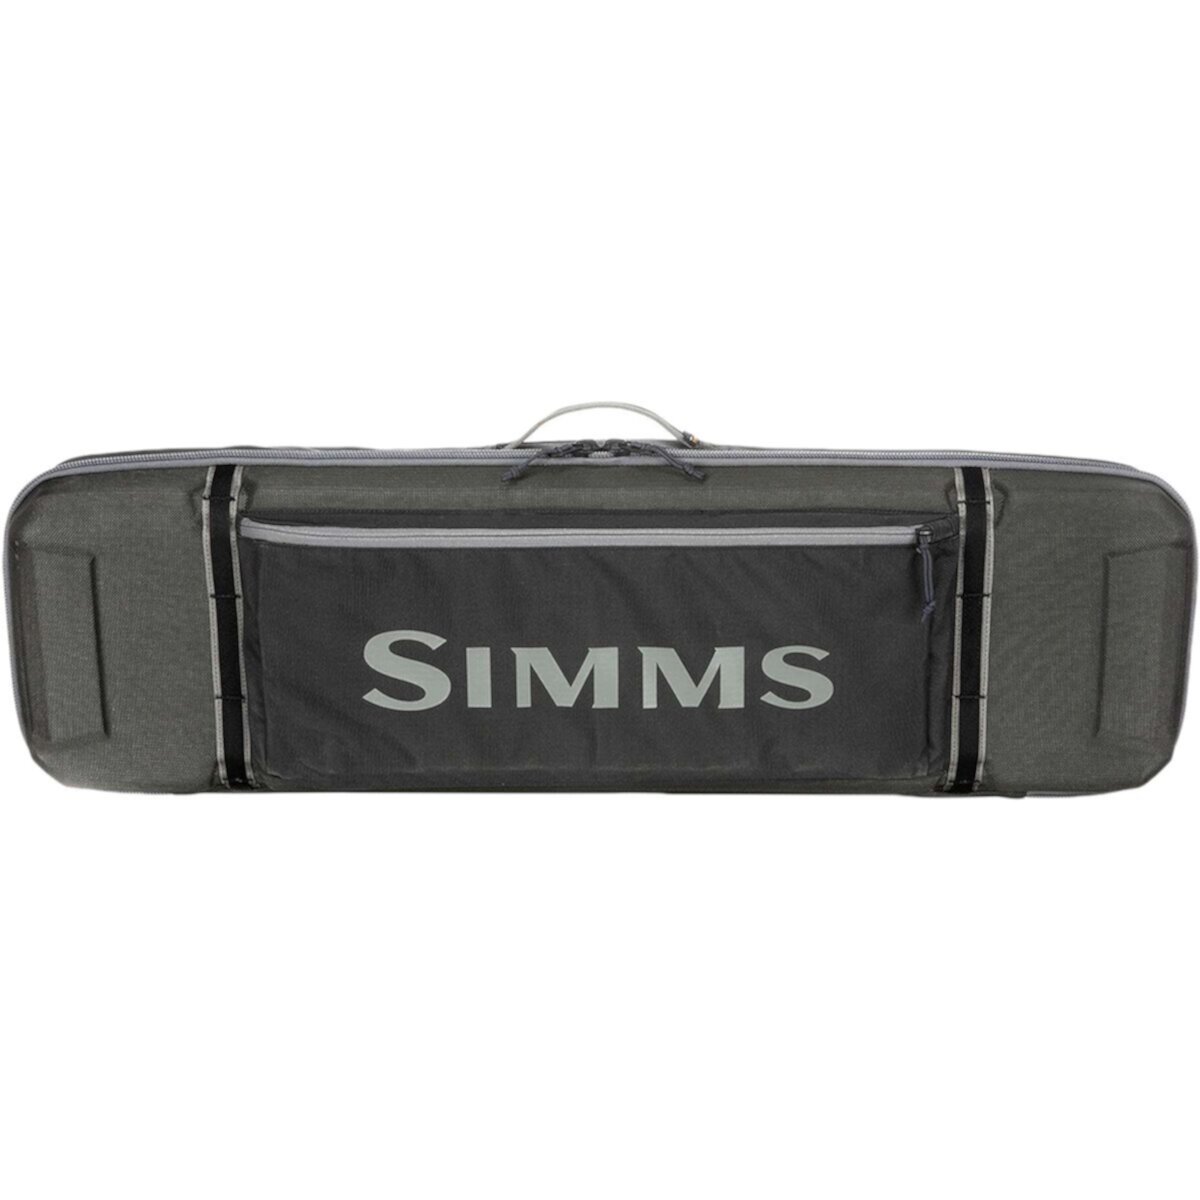 Simms GTS Rod & Reel Vault - хранилище удилищ и катушек Simms